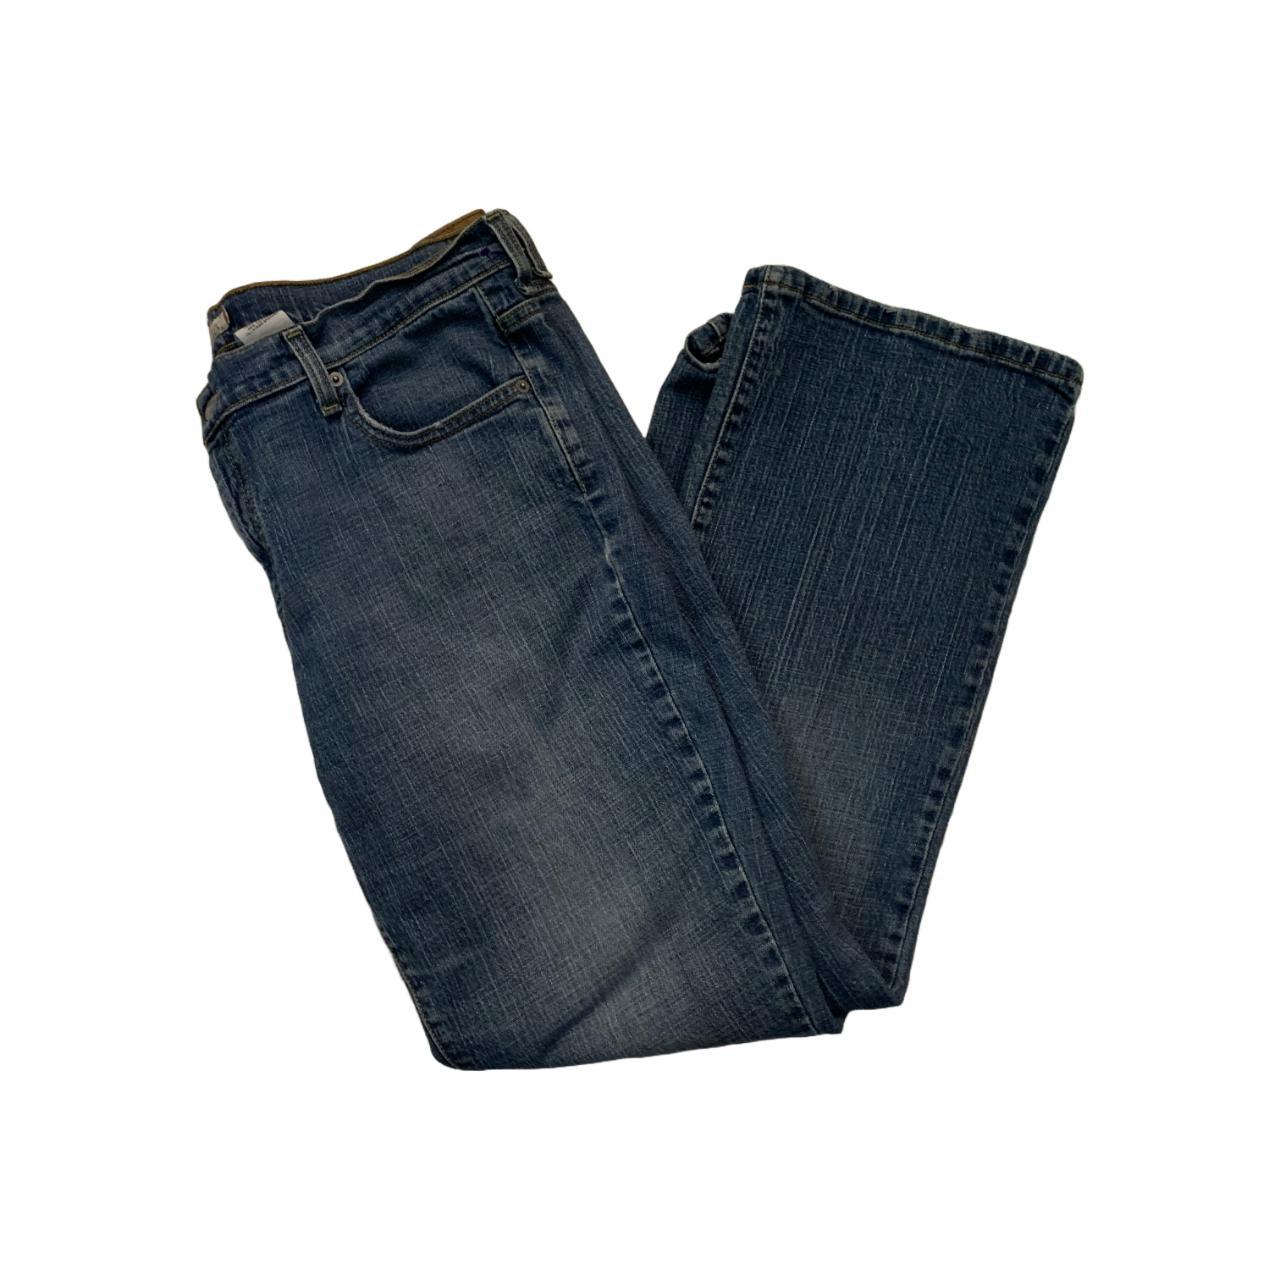 Light wash straight leg jeans. Perfect fit Size-... - Depop